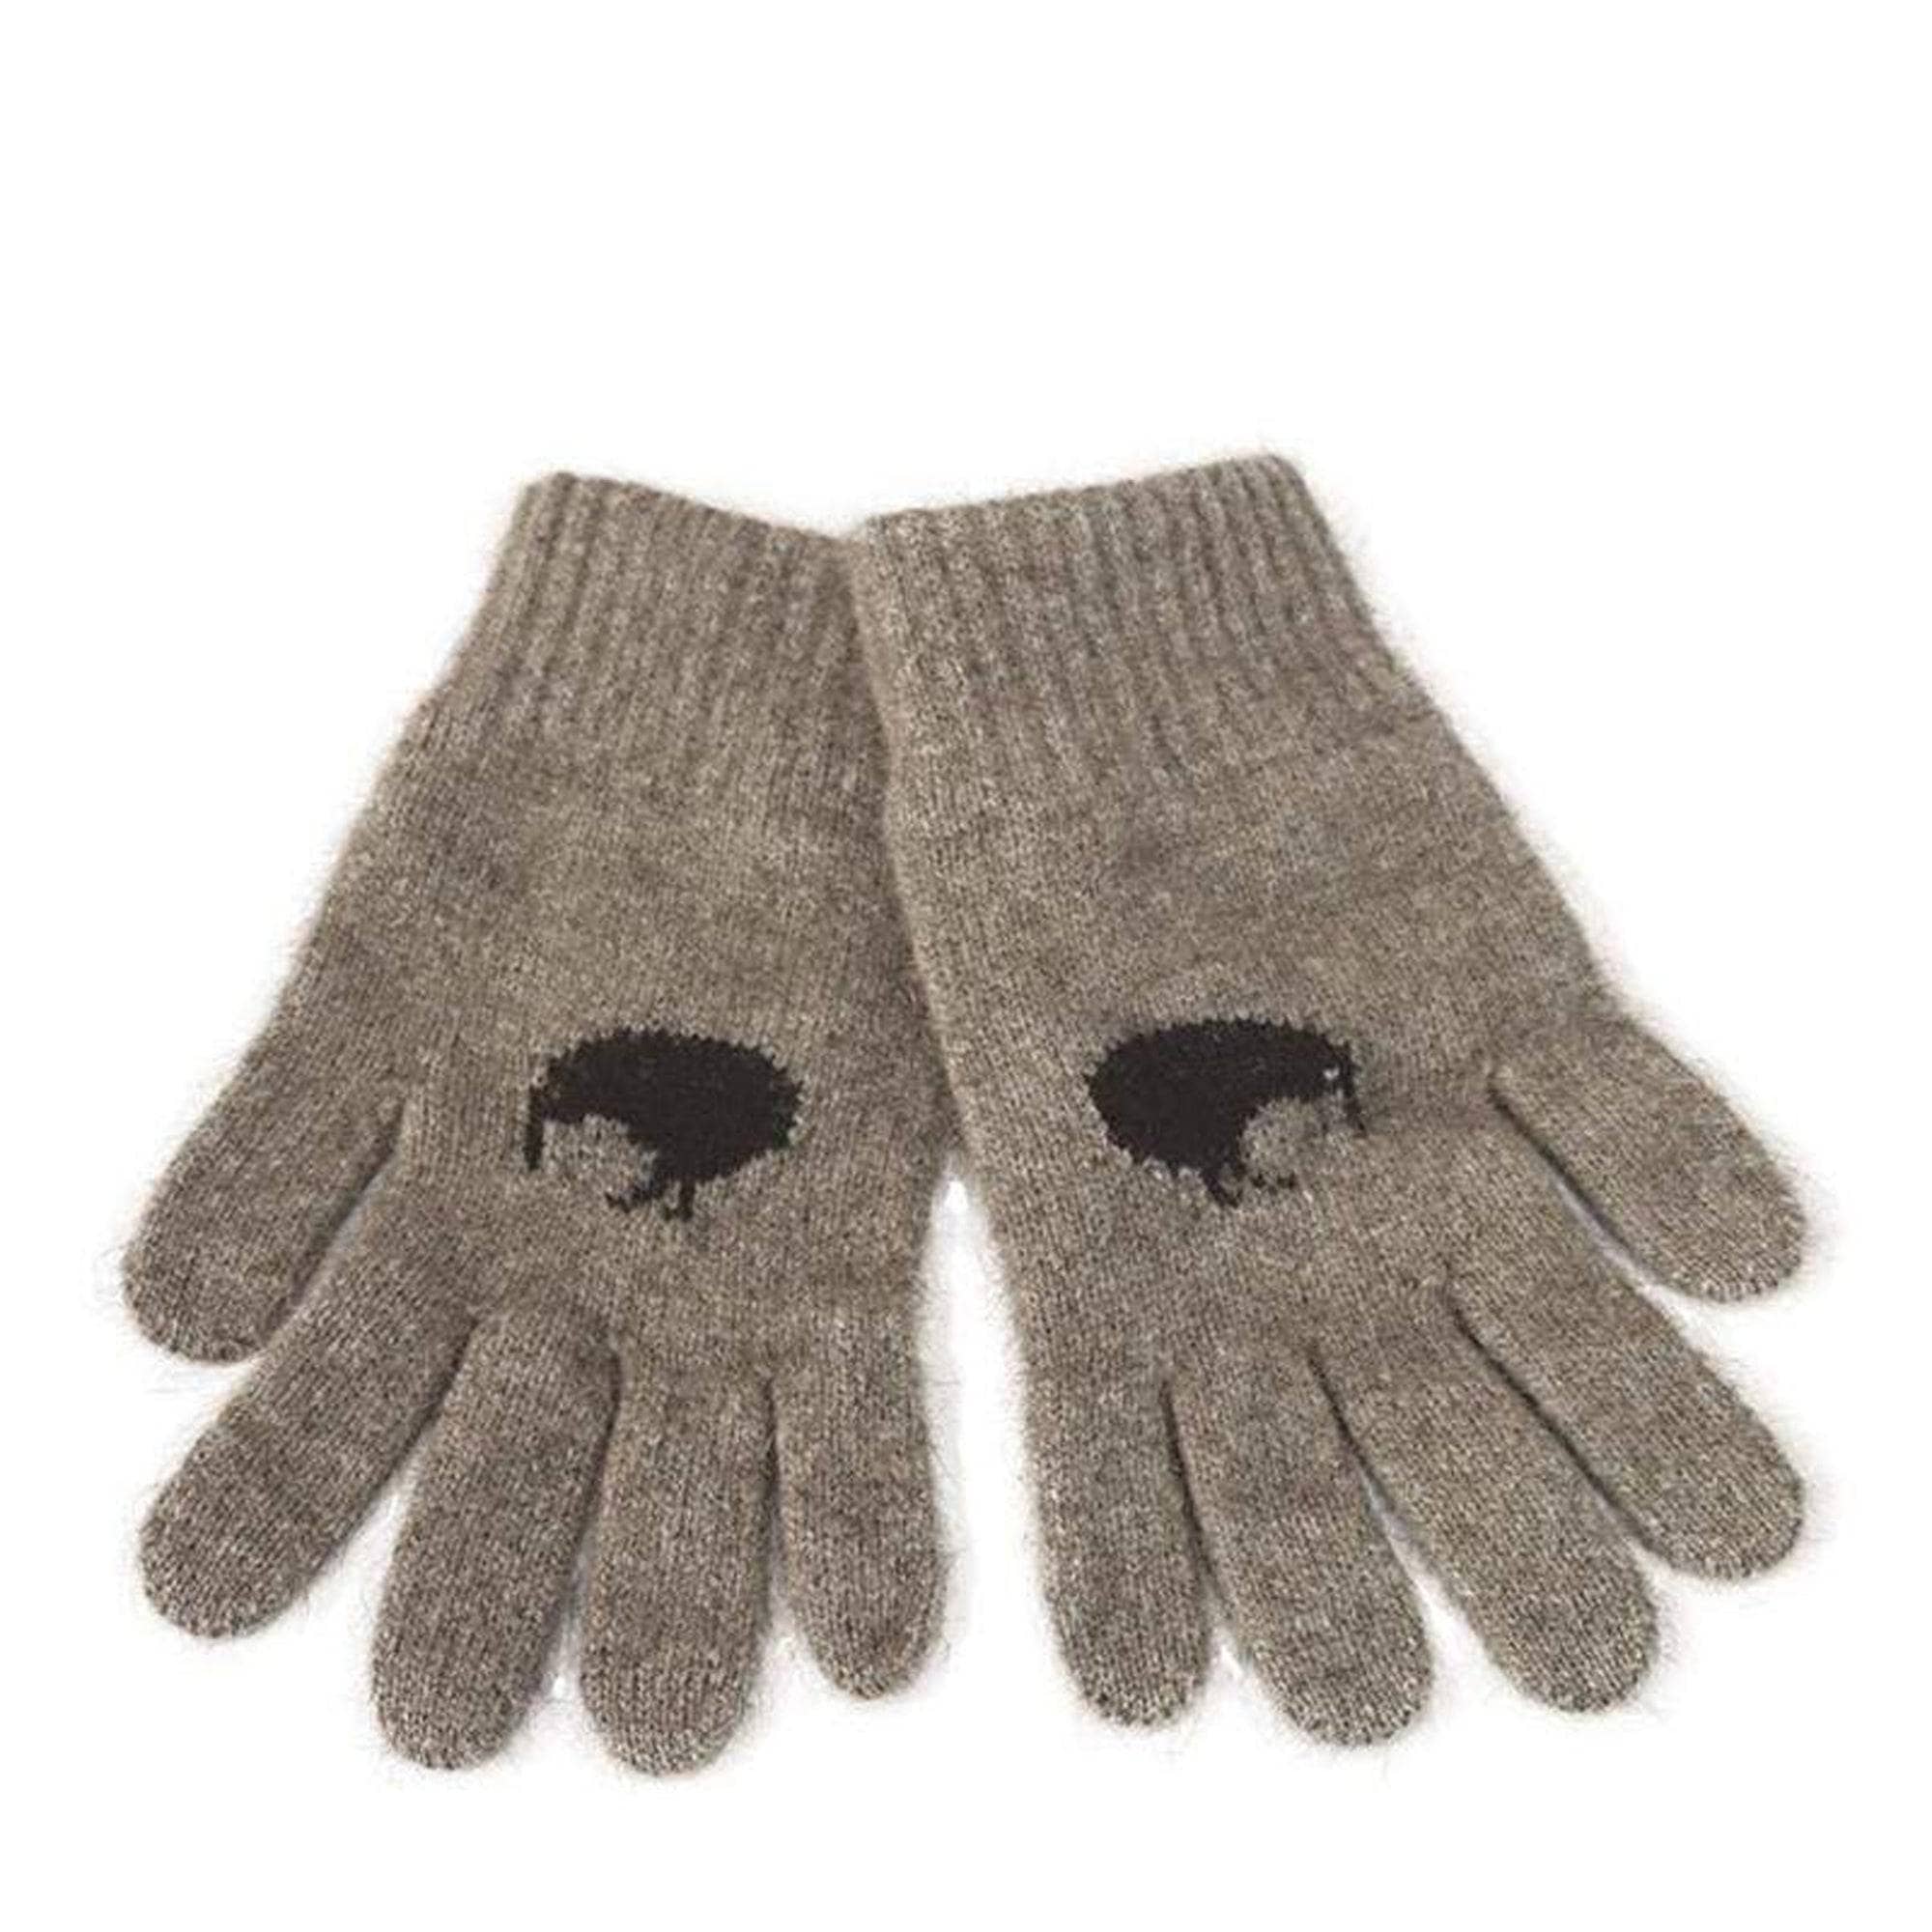 Accessories - Premium Possum and Merino Wool Gloves - Original UGG Australia Classic